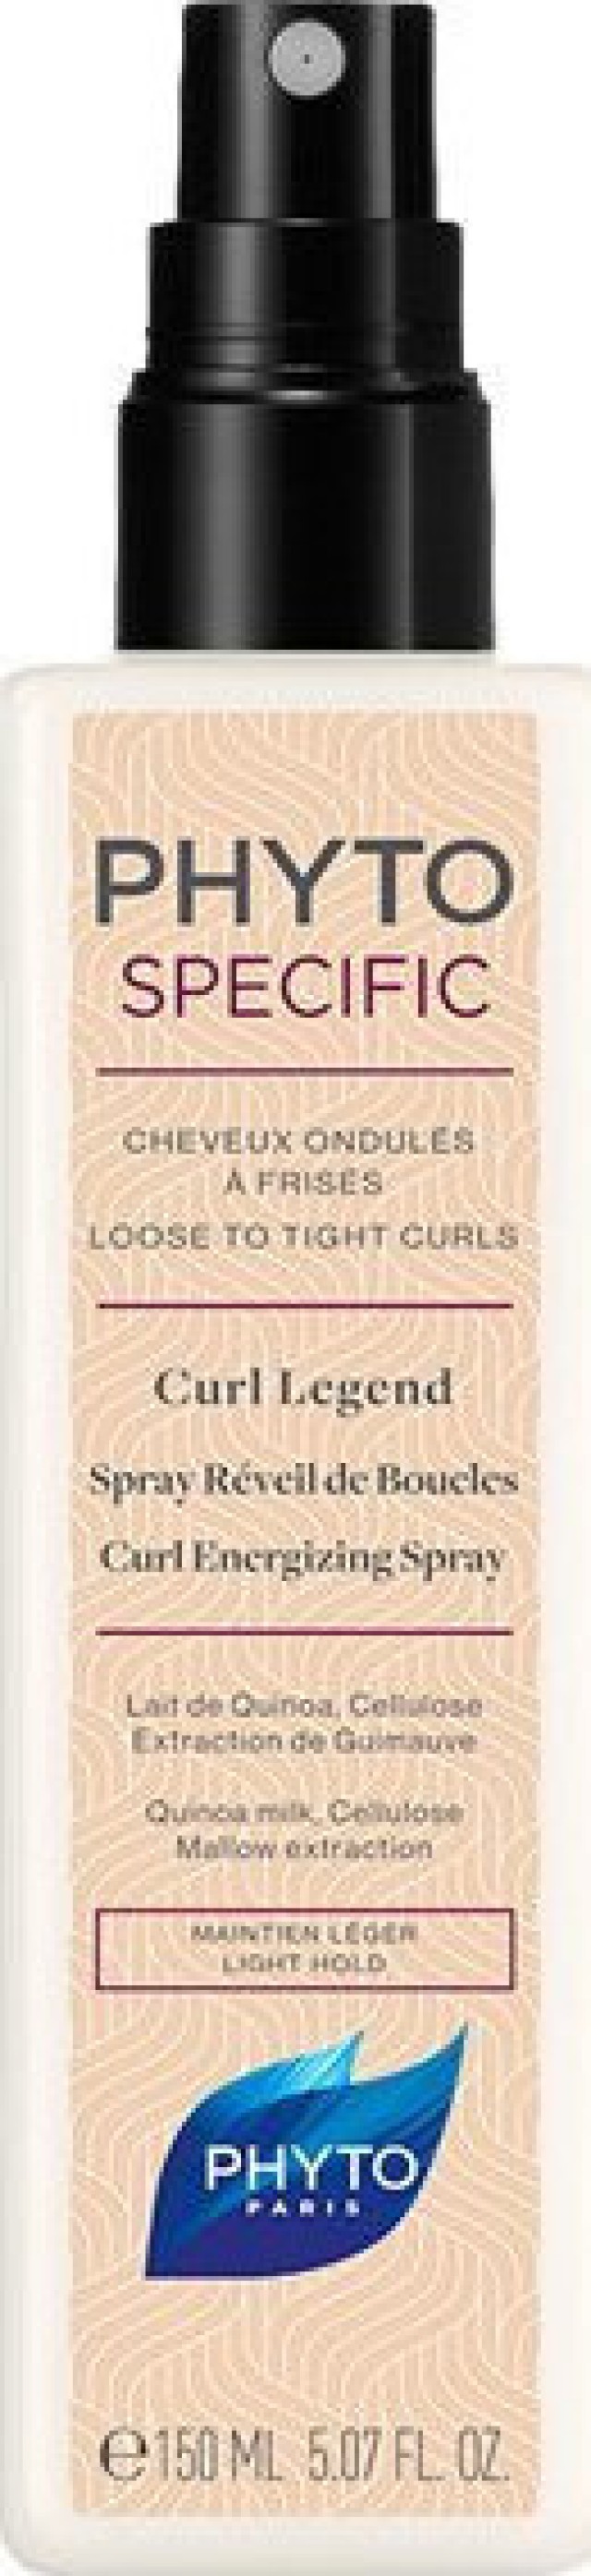 Phyto Specific Curl Legend Reveil De Boucles Spray Για Σγουρά Μαλλιά 150ml